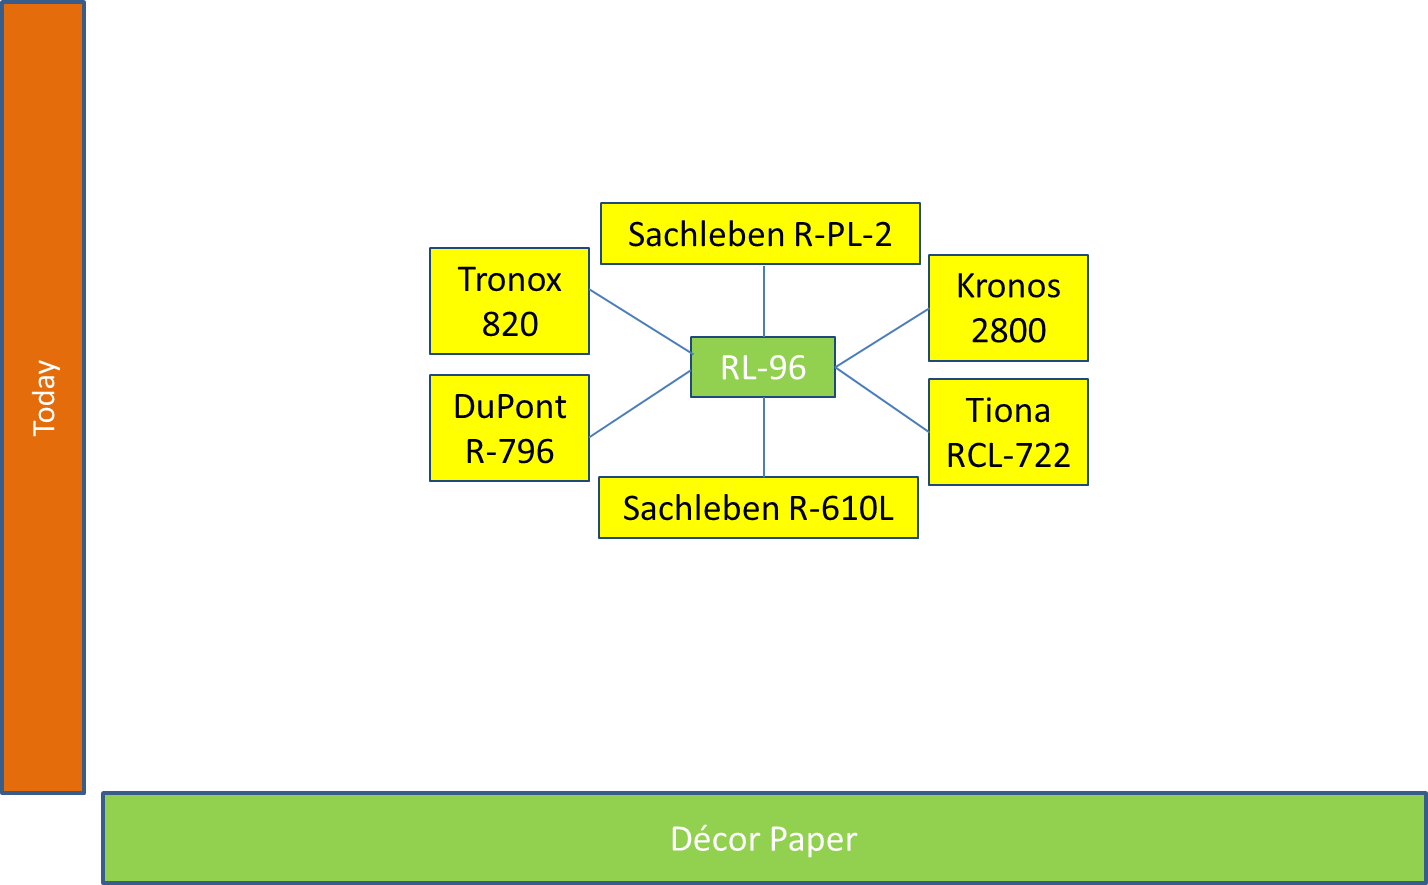 Decor Paper Grades Technology for RL-96